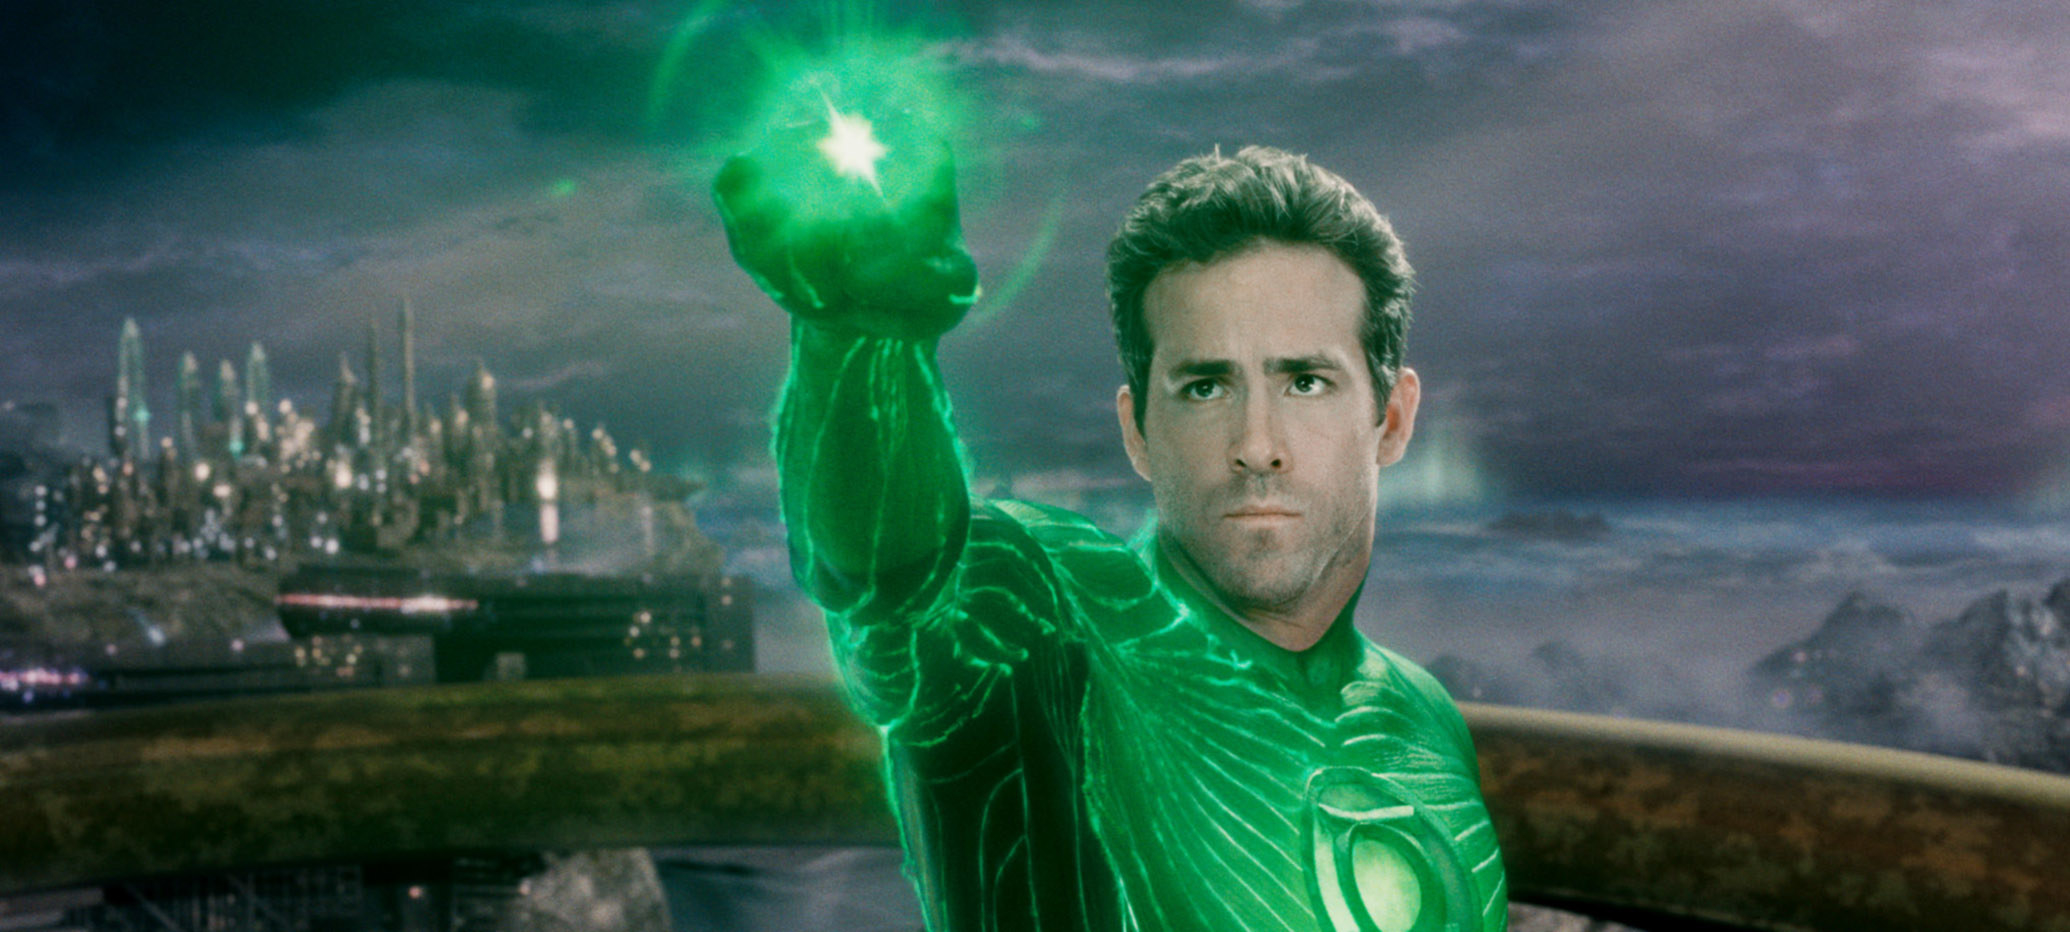 Ryan as the Green Lantern